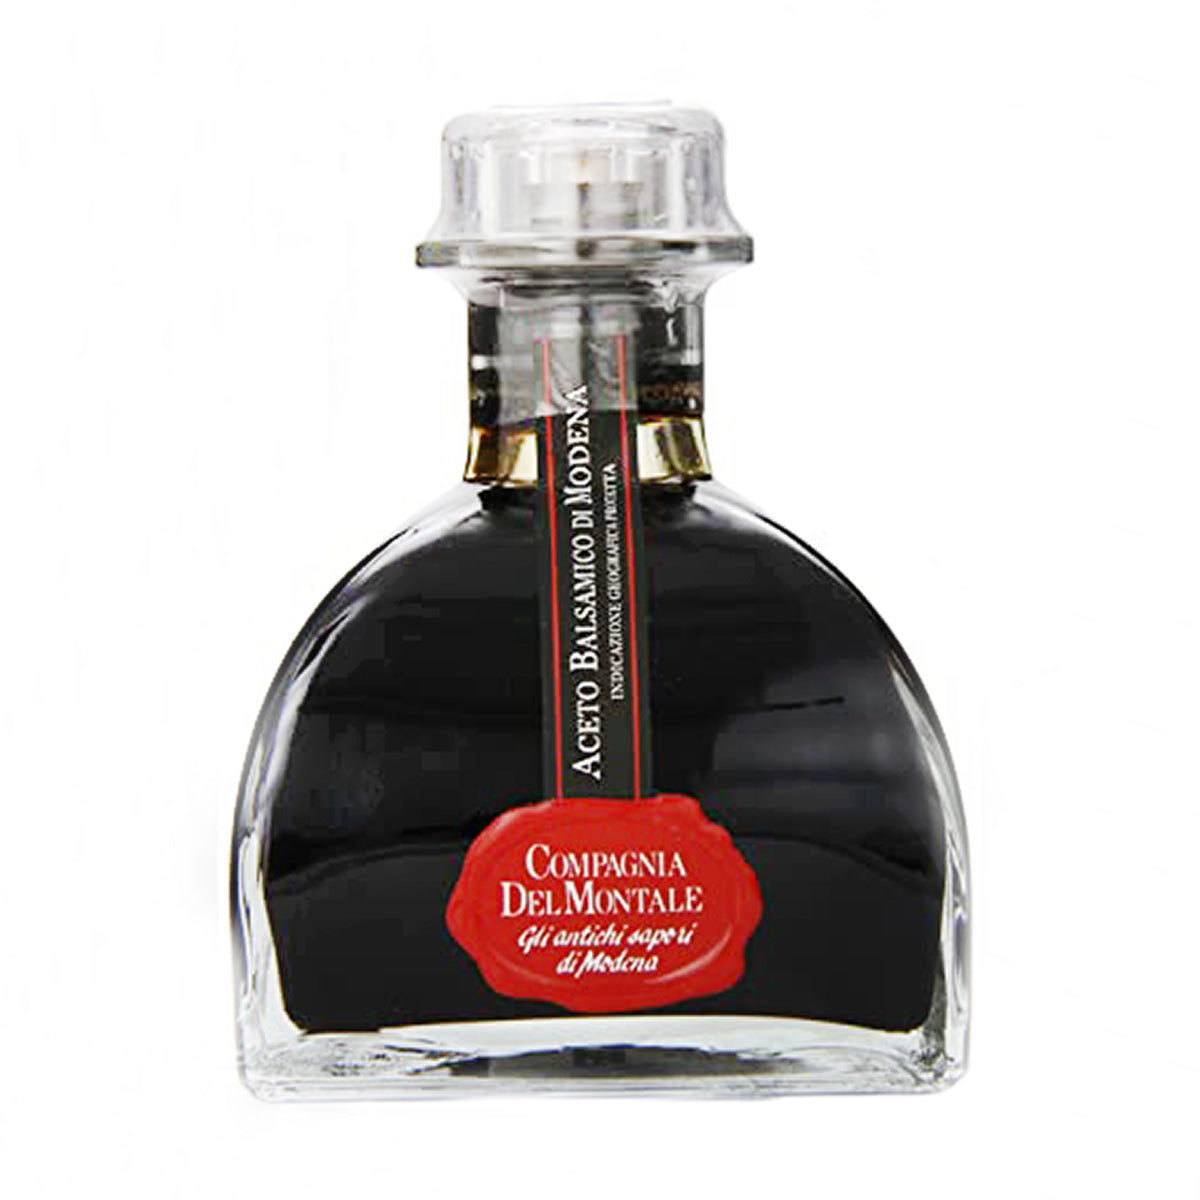 Compagnia Del Montale Special Edition Balsamic Vinegar IGP 250ml